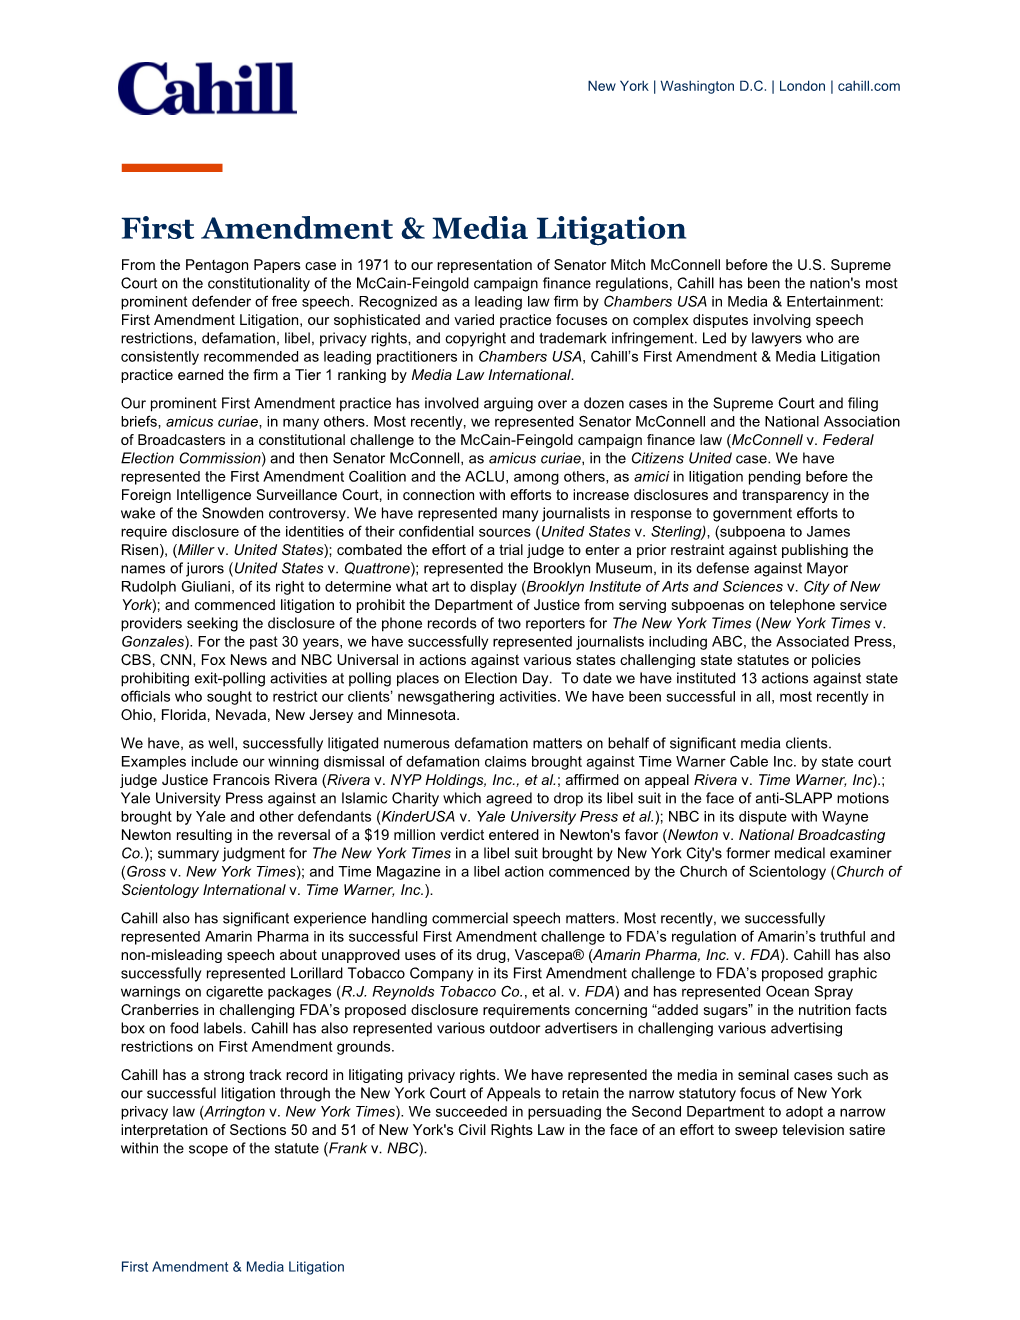 First Amendment & Media Litigation